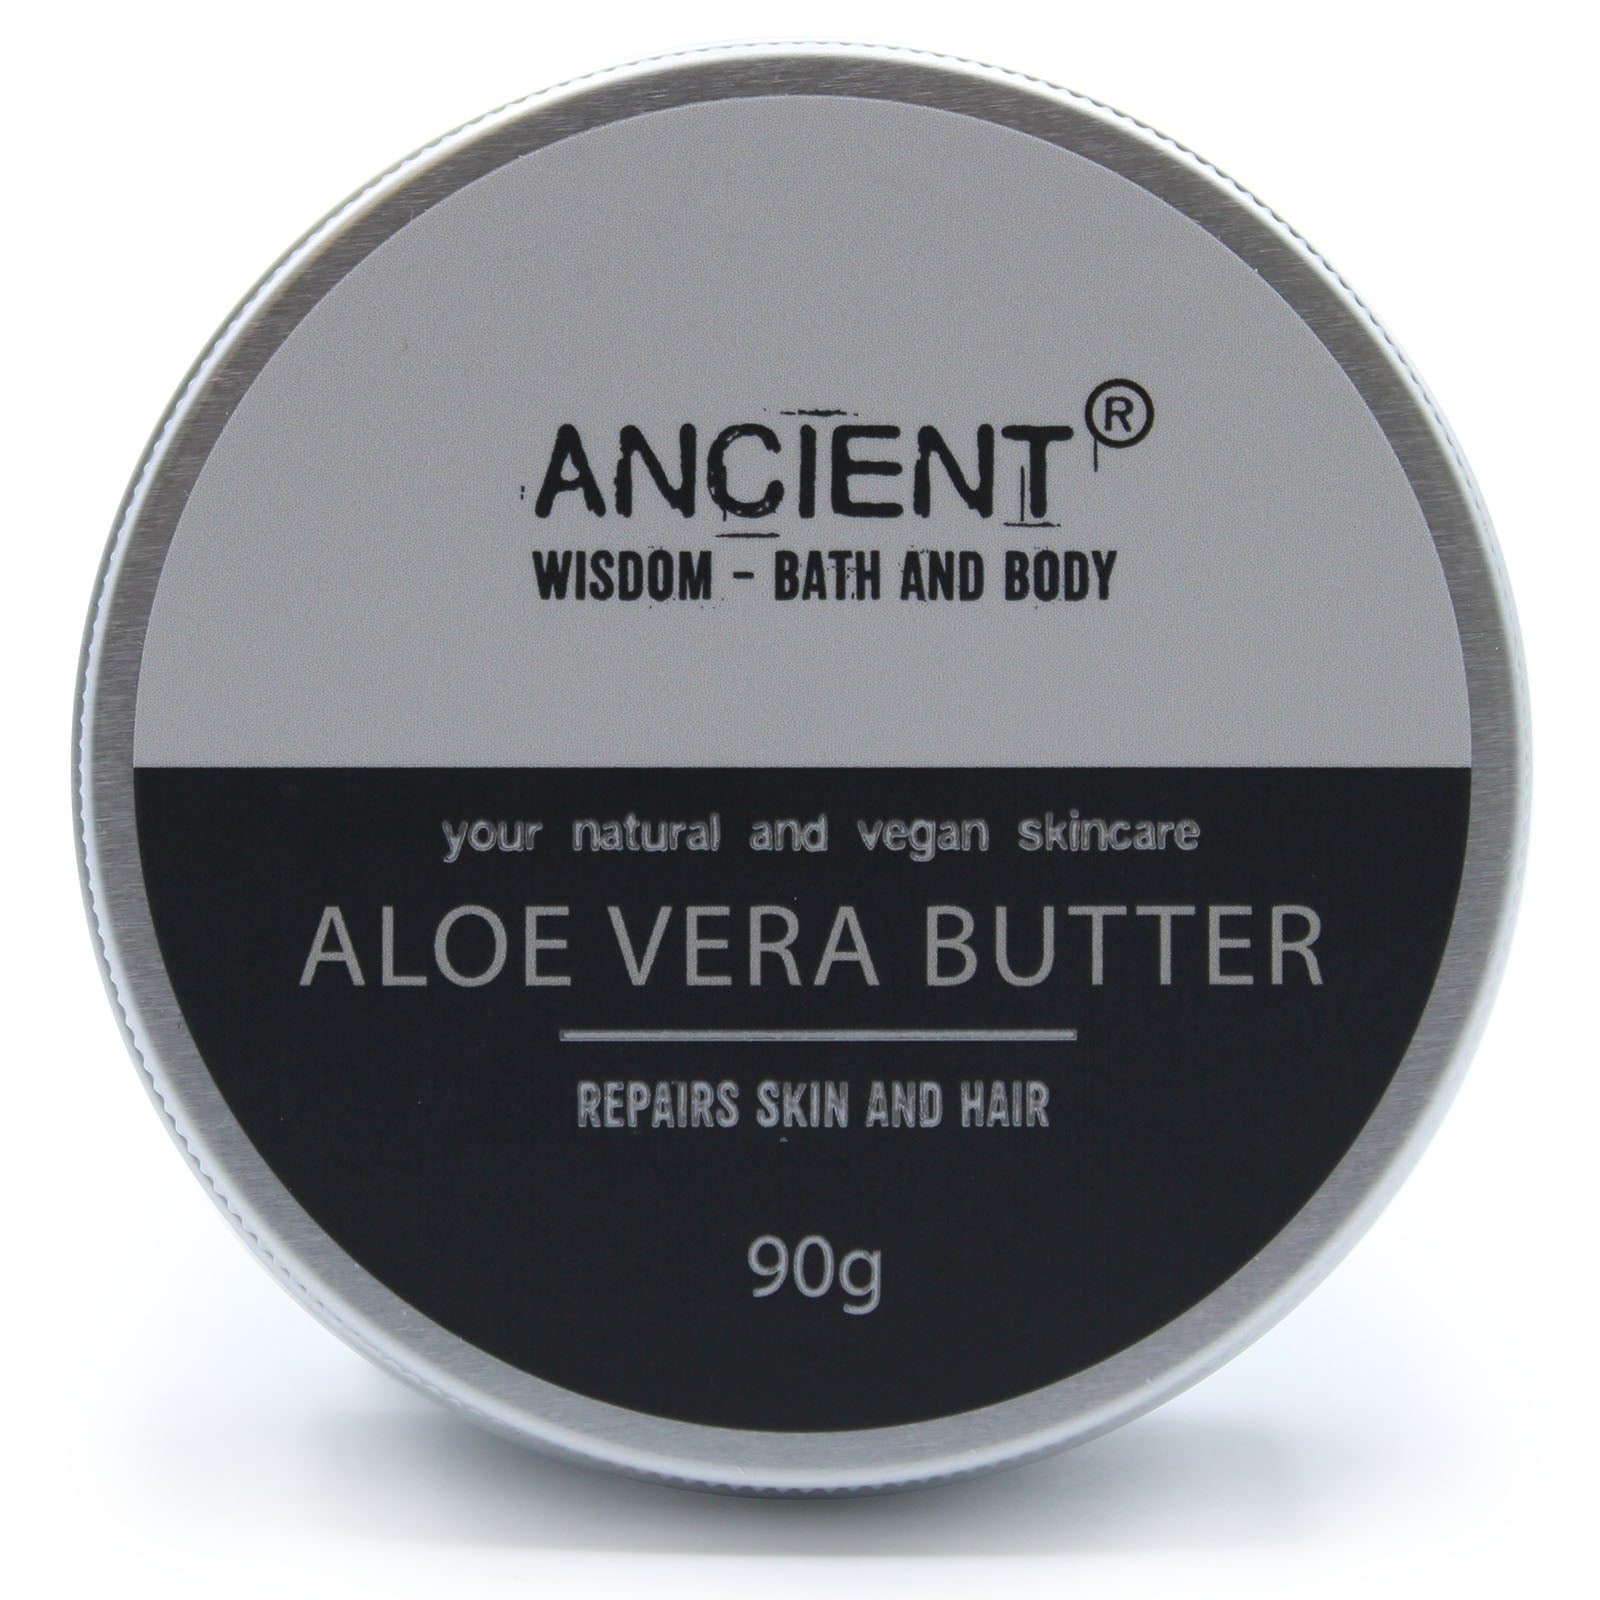 View Pure Body Butter 90g Aloe Vera information